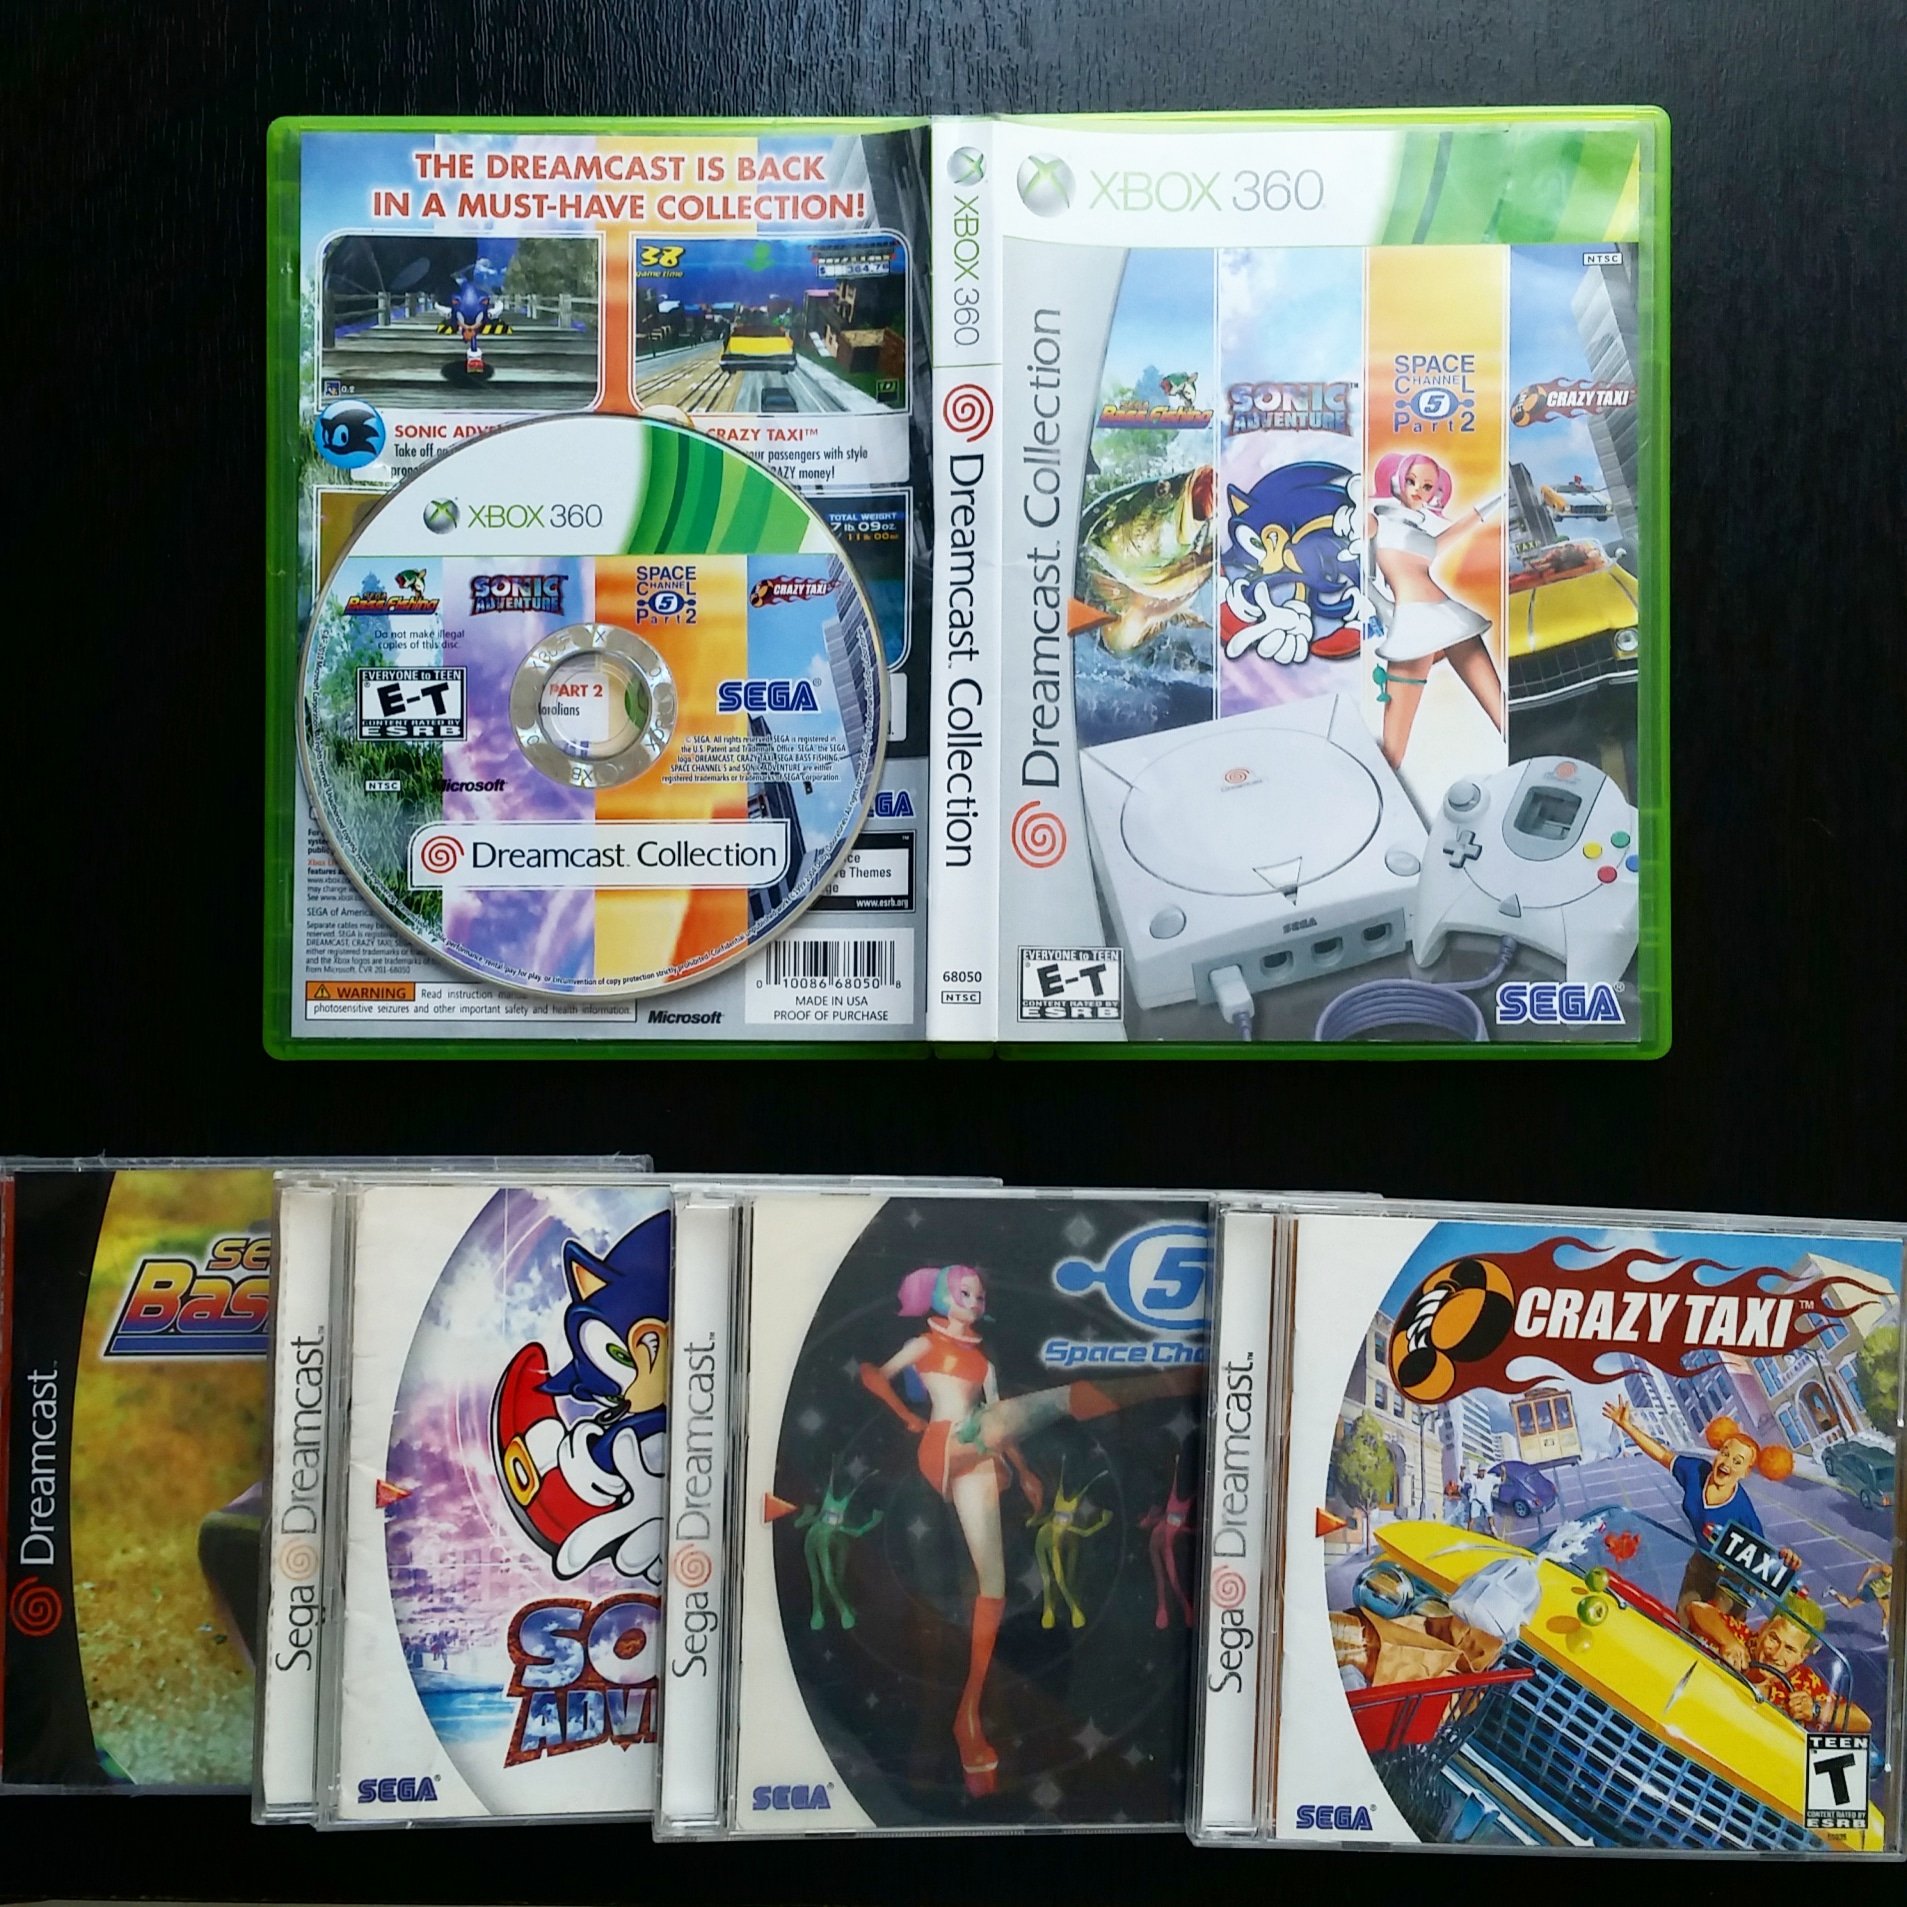 crisis twaalf Snel Defthead on Twitter: "Dreamcast Collection para el Xbox 360. I ❤ Dreamcast  #sega #dreamcast #sonic #spacechannel5 #spacechannel5part2 #crazytaxi #xbox  #xbox360 #x360 #photooftheday #gameaddict #retro #retrocollective  #retrogaming #gamin #gaming ...